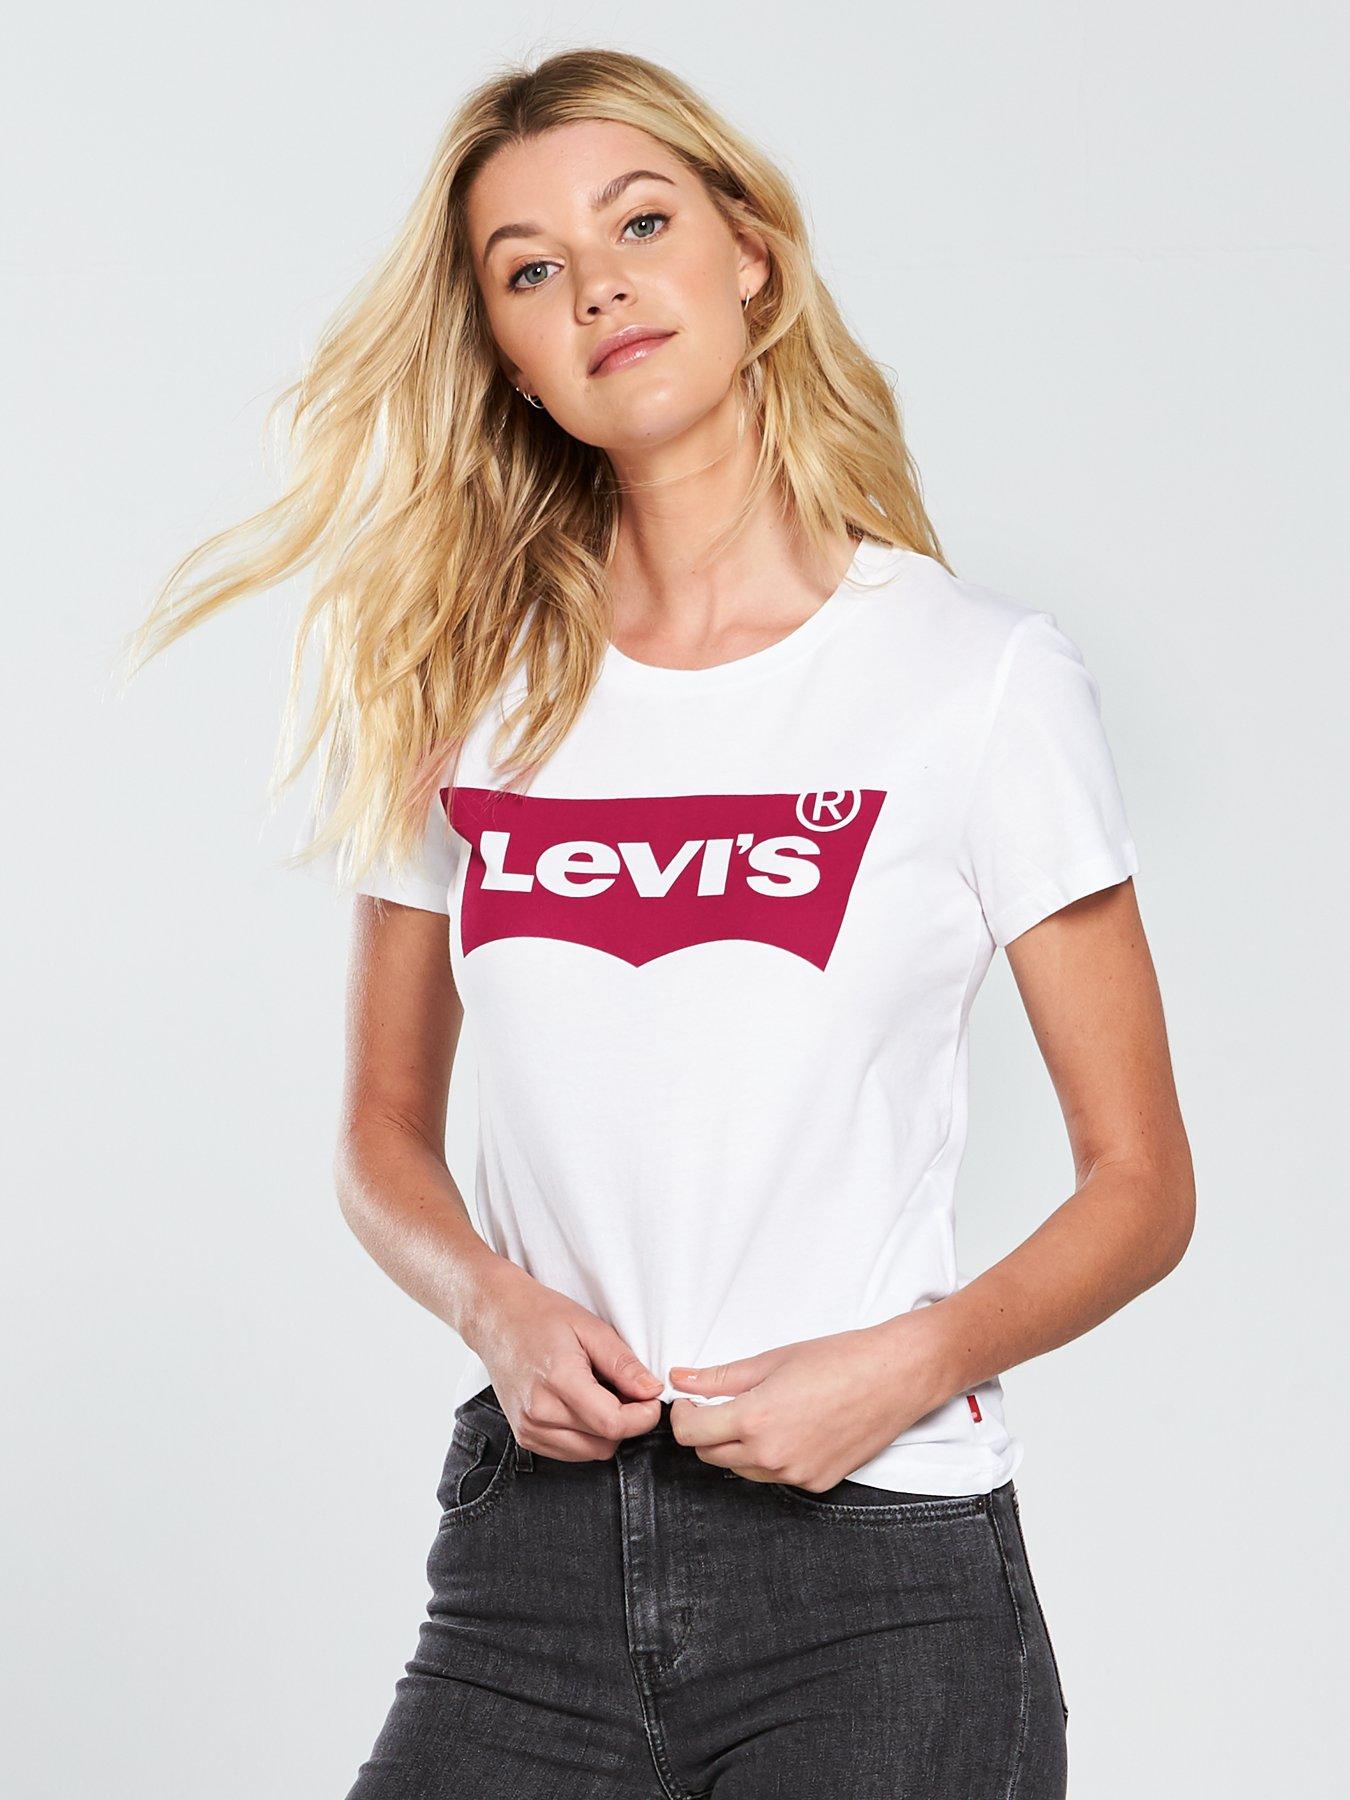 Levi's T-Shirts | Levi's Tops | Very.co.uk